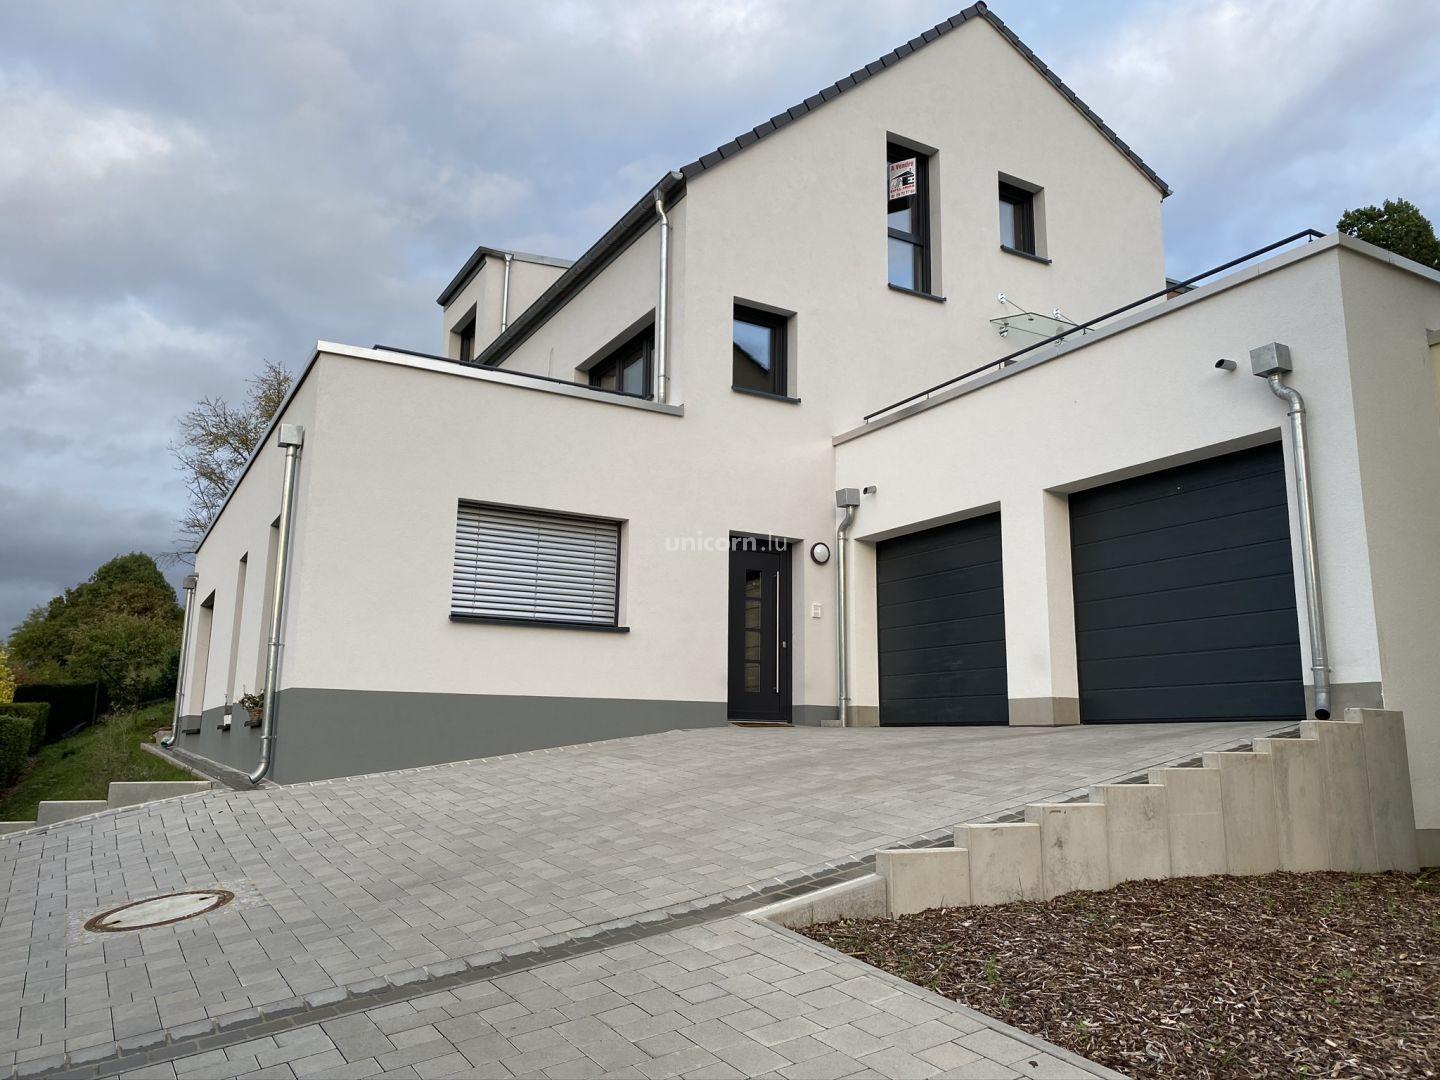 Appartement en vente à Echternach  - 153m²